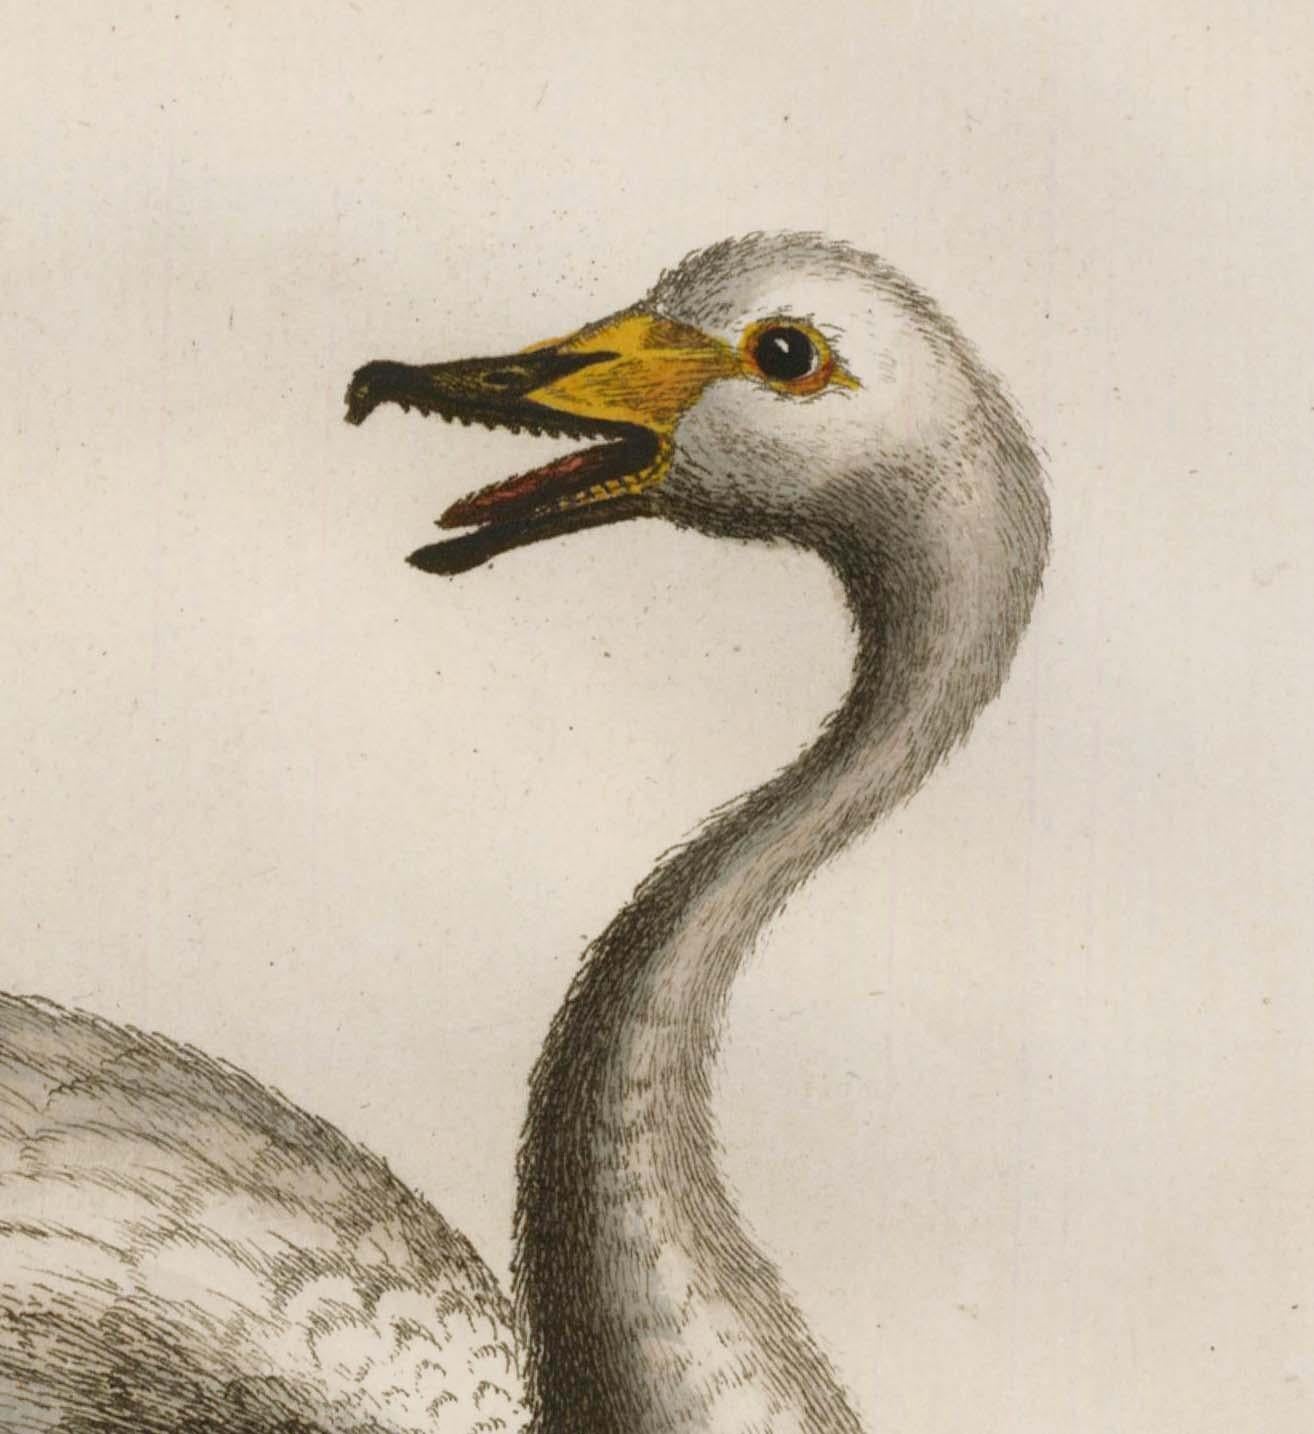  Hand-Colored Swan Engraving - Beige Animal Print by George Edwards